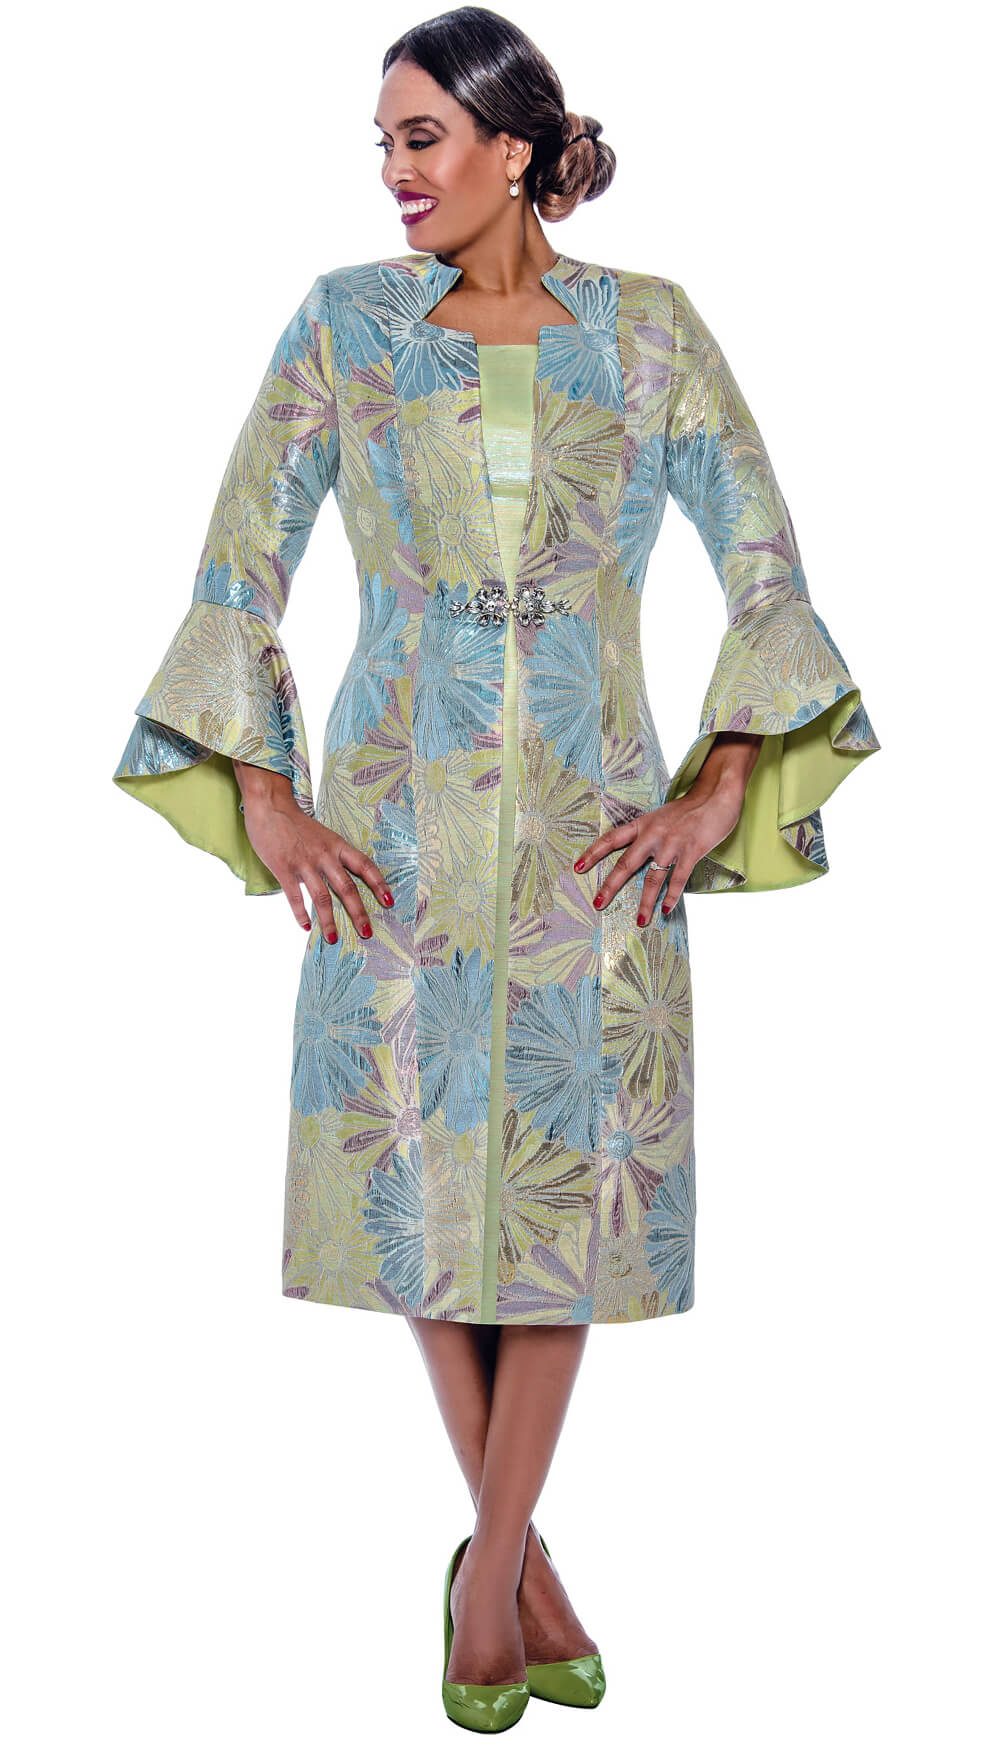 Divine Queen Dress & Jacket 2342-MUL Size 8-30W